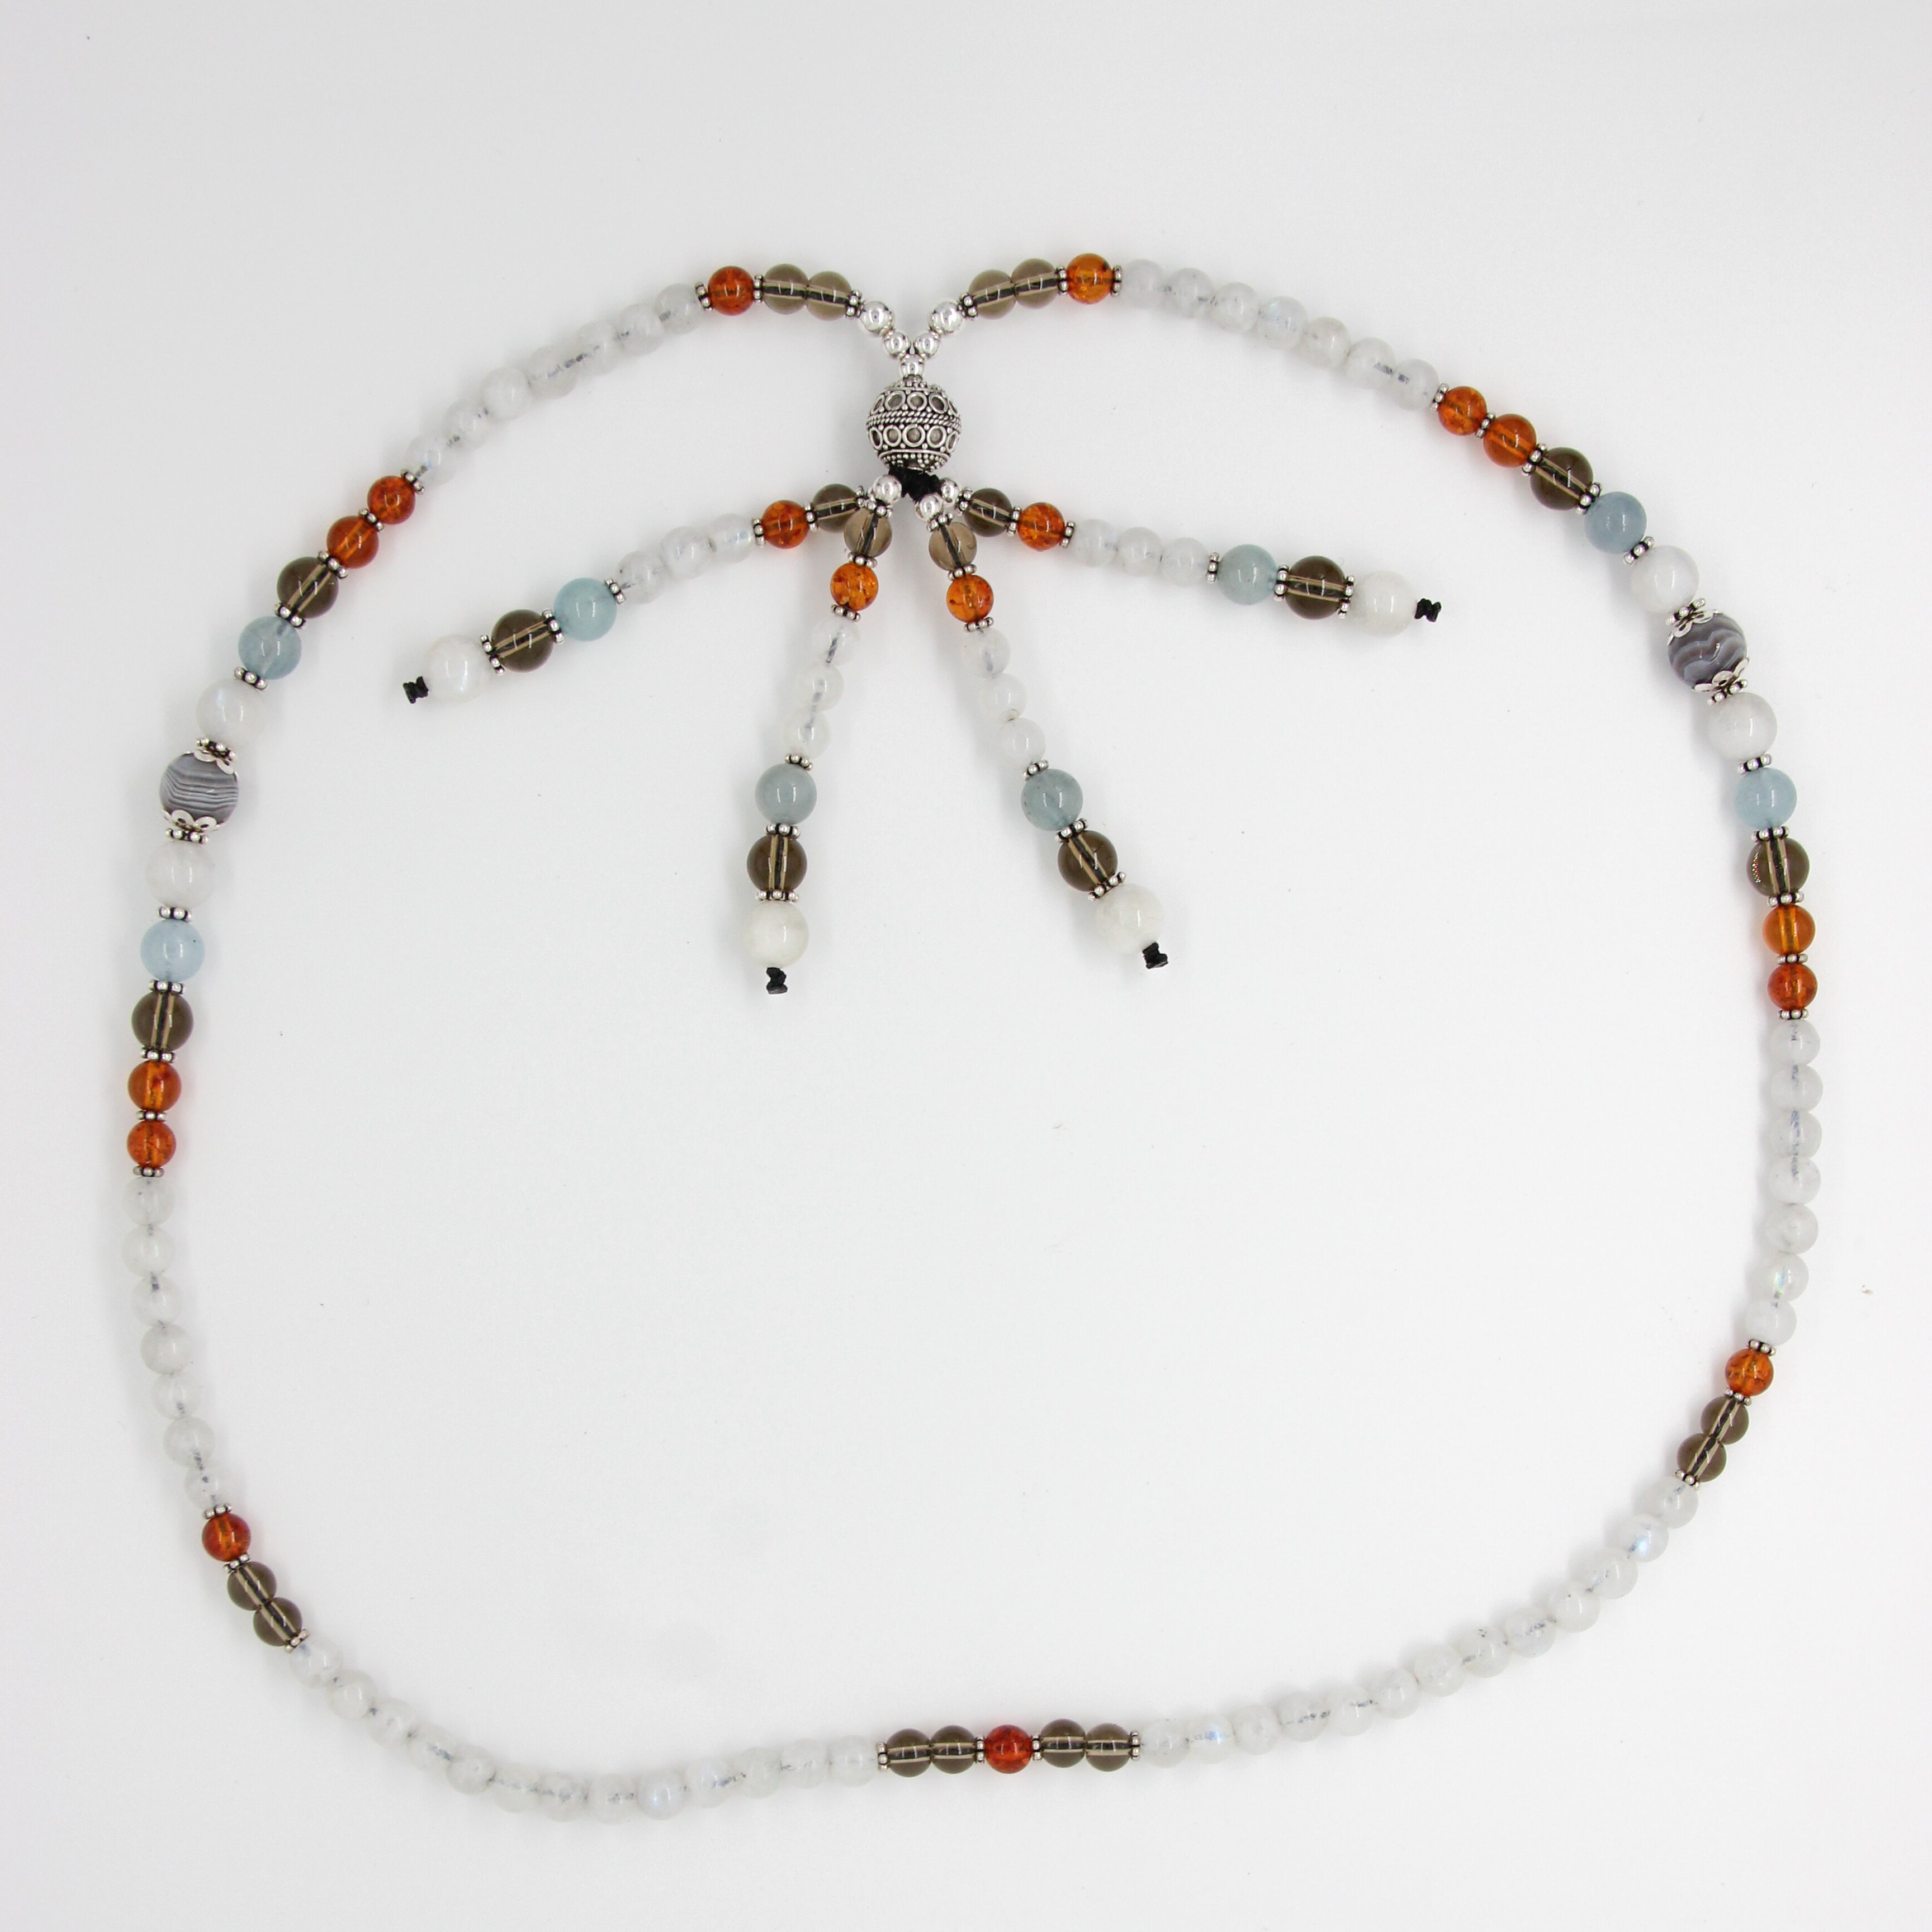 Rainbow Moon Stone Necklace with Amber, Aquamarine, Agate, Smokey Quartz and Silver Beads